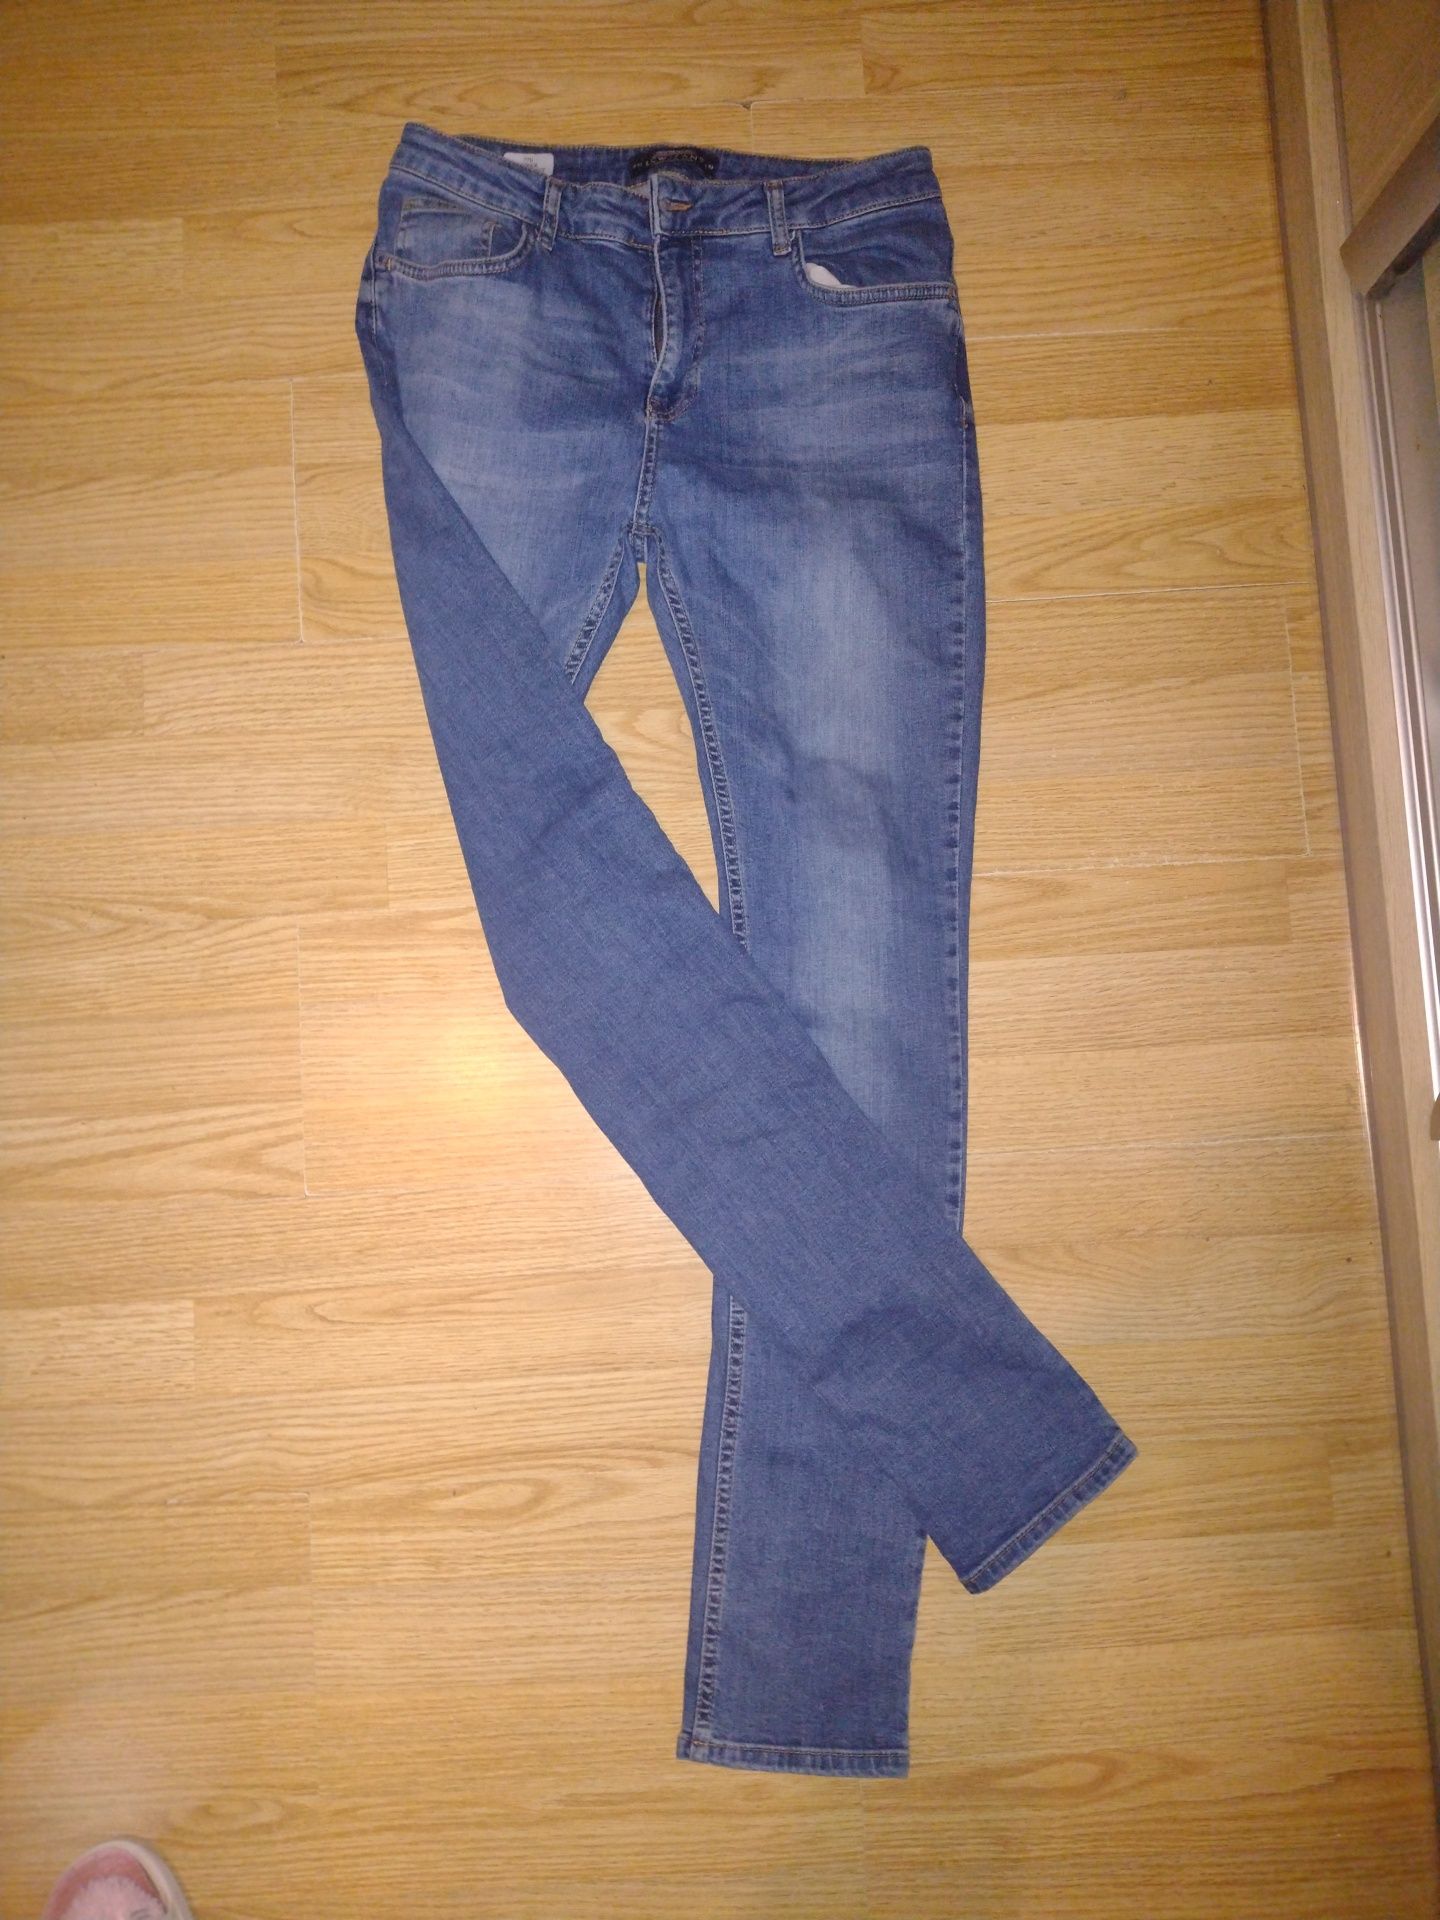 Spodnie męskie jeansy rurki supper skinny fit M L 34